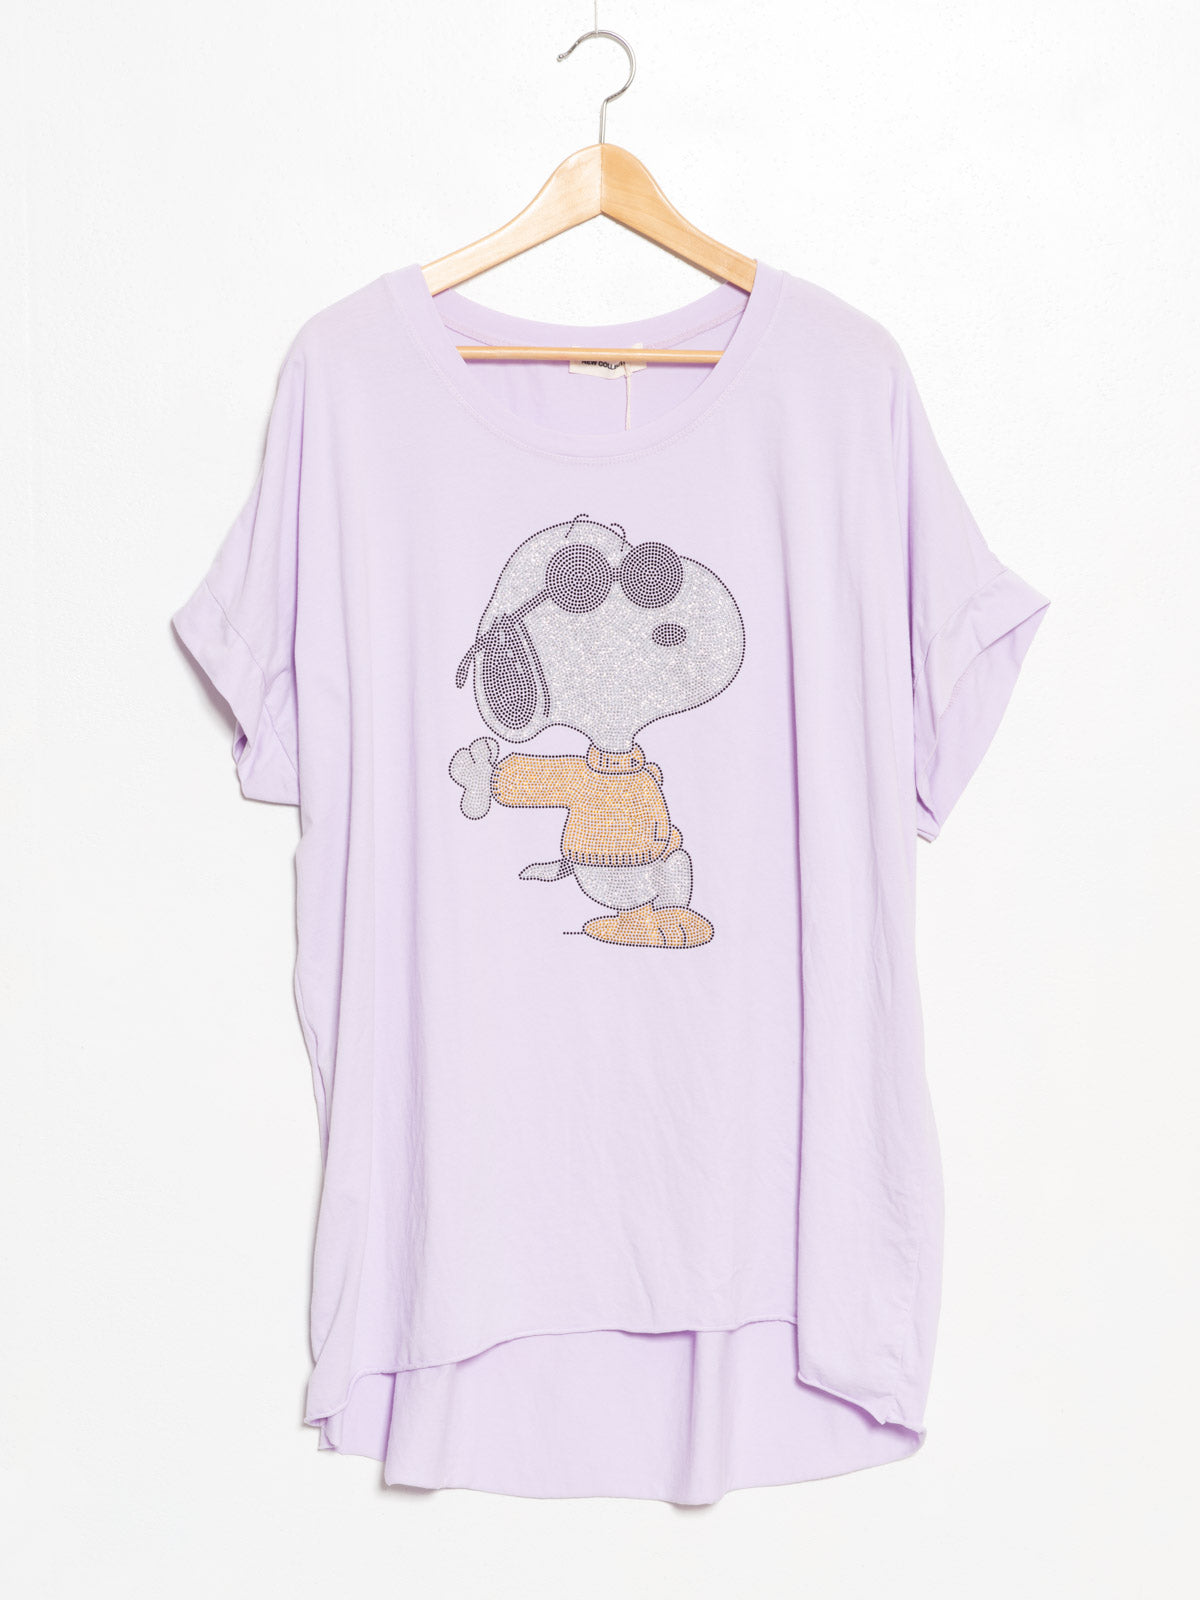 Snoopy t-shirt